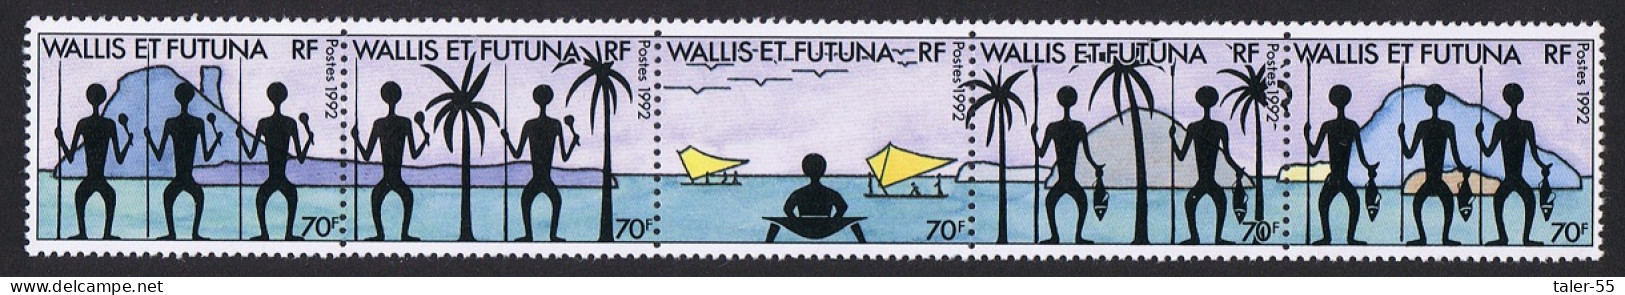 Wallis And Futuna Islands Strip Of 5v 1992 MNH SG#606-610 Sc#436 A-e - Nuevos